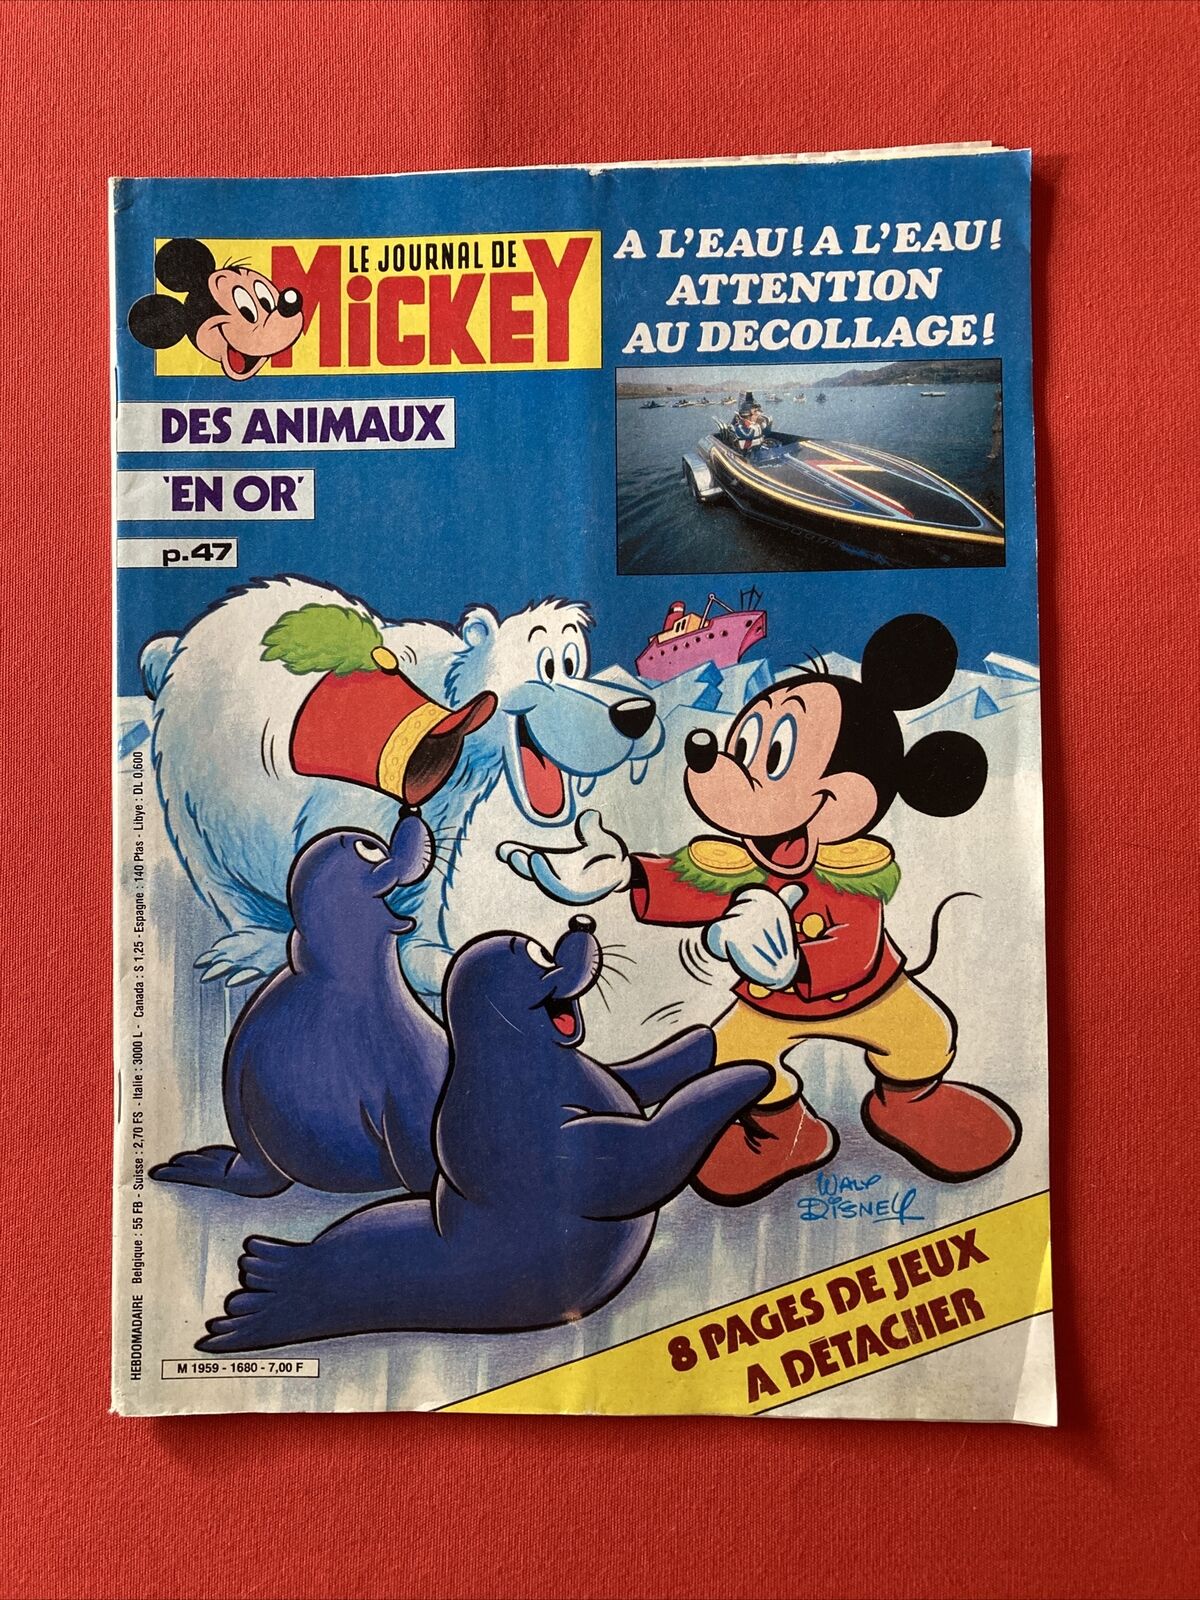 The Journal de Mickey No ’1680 View September 1984 Disney Good Condition NM Soft